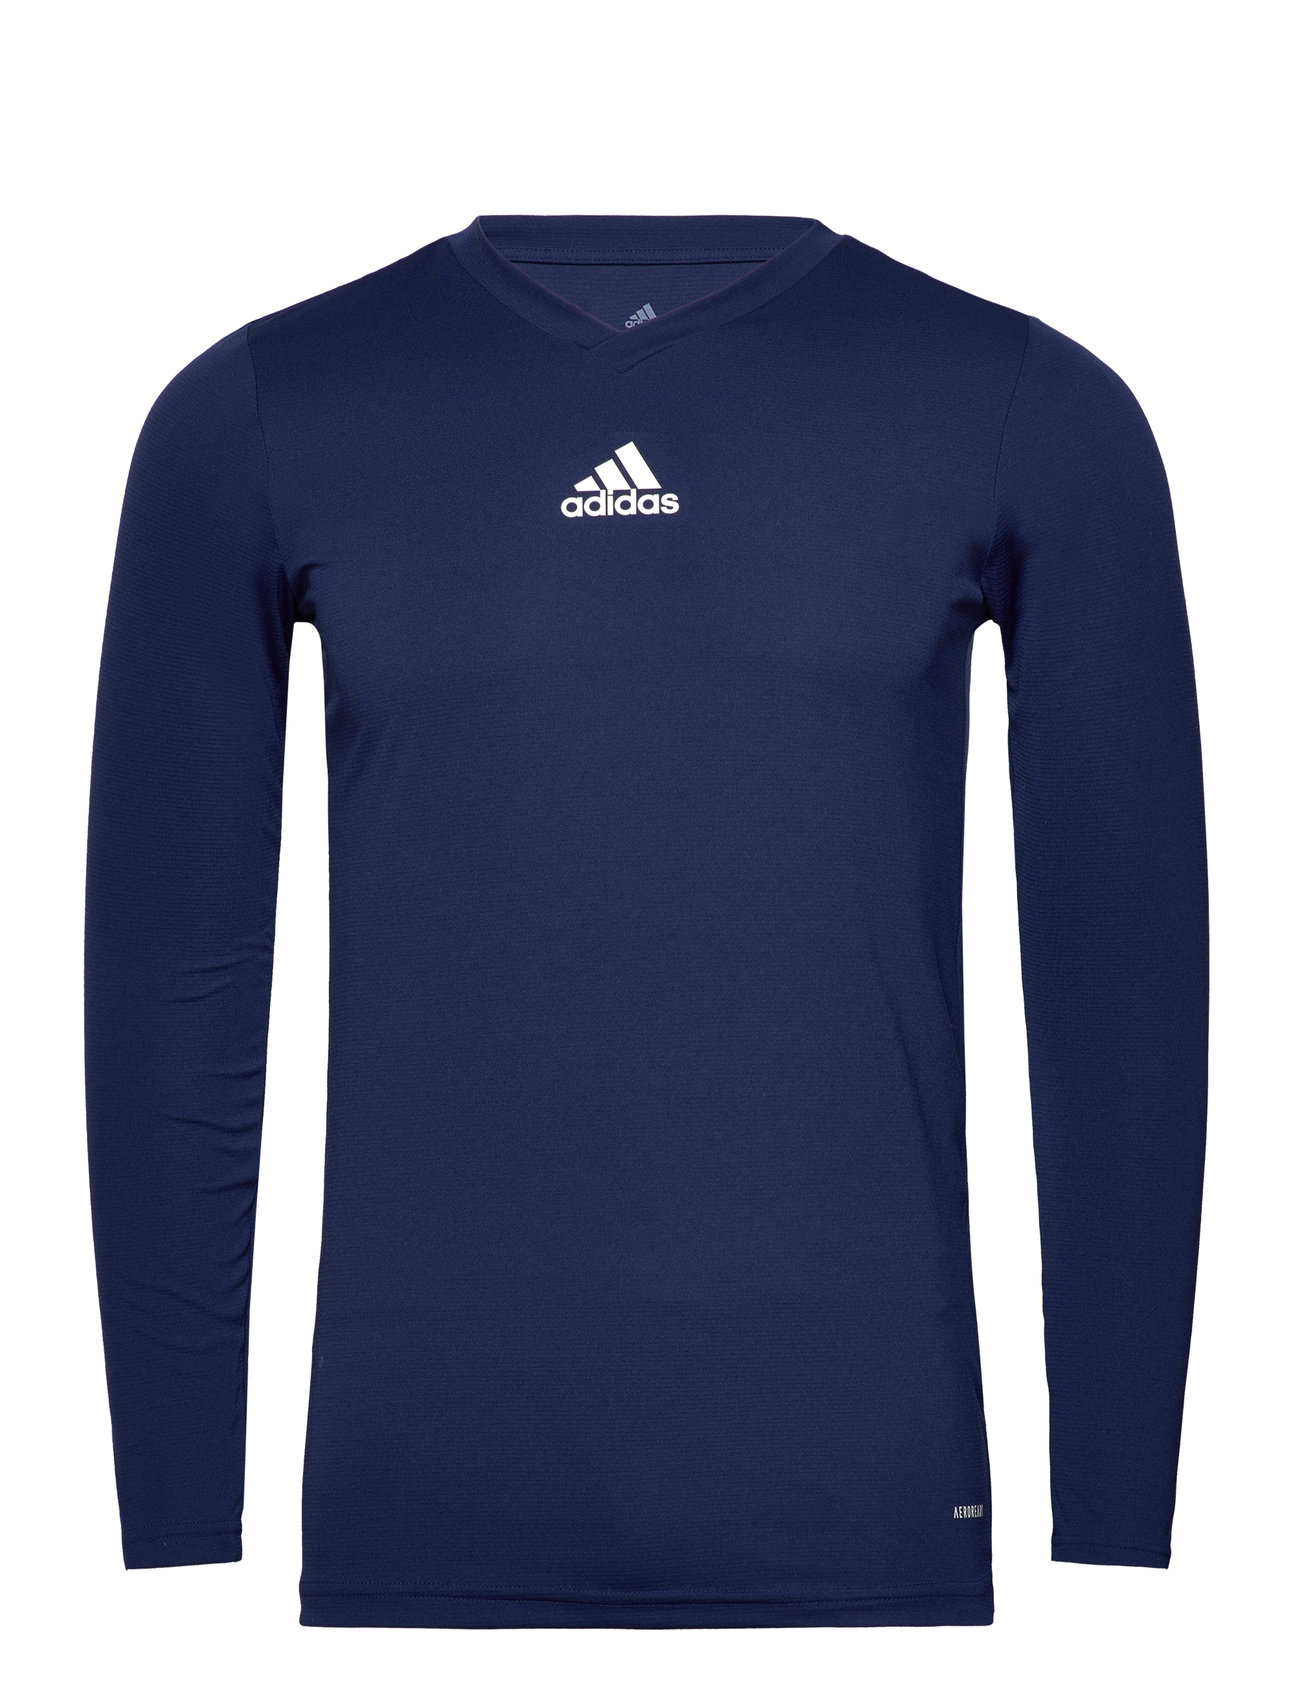 Team Base Tee Y Sport T-shirts Long-sleeved T-shirts Navy Adidas Performance